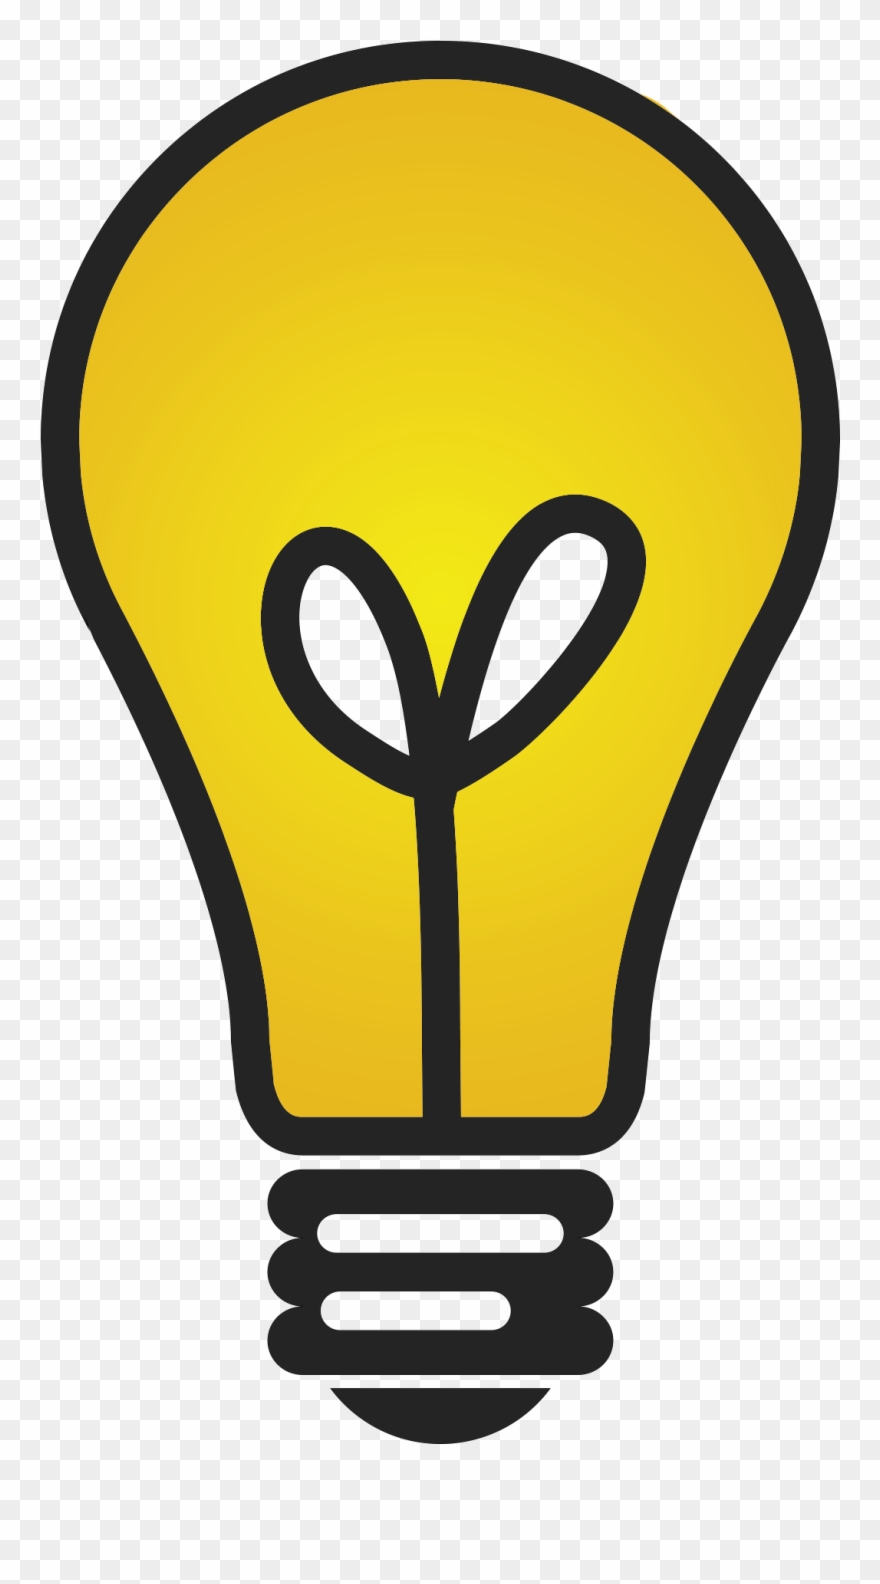 lightbulb clipart icon